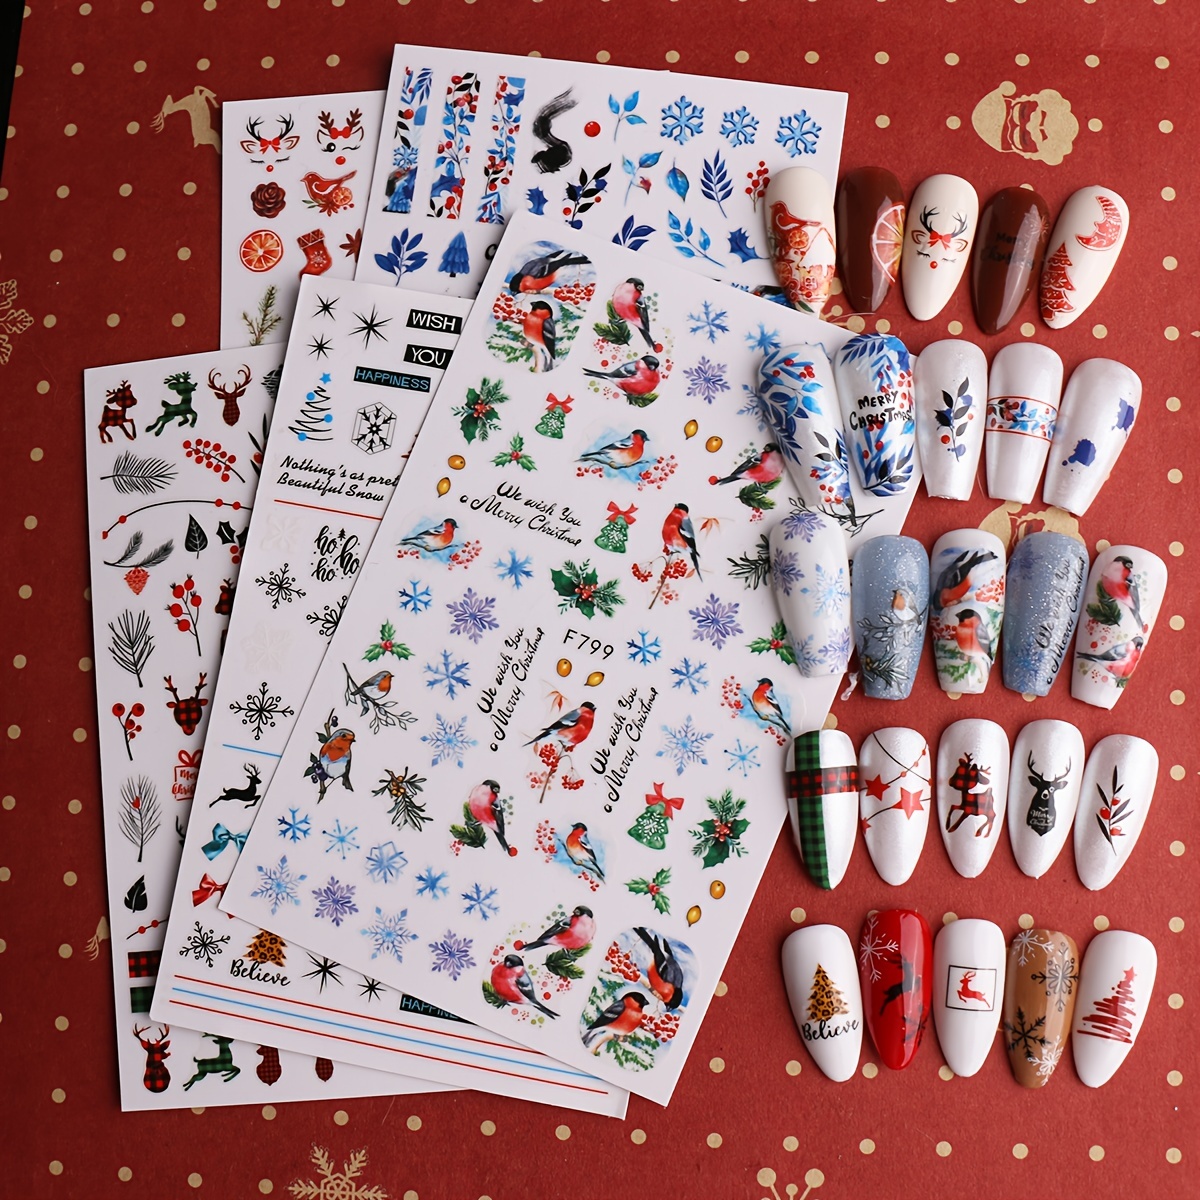  10 Sheets Christmas Nail Art Sticker Decals Christmas